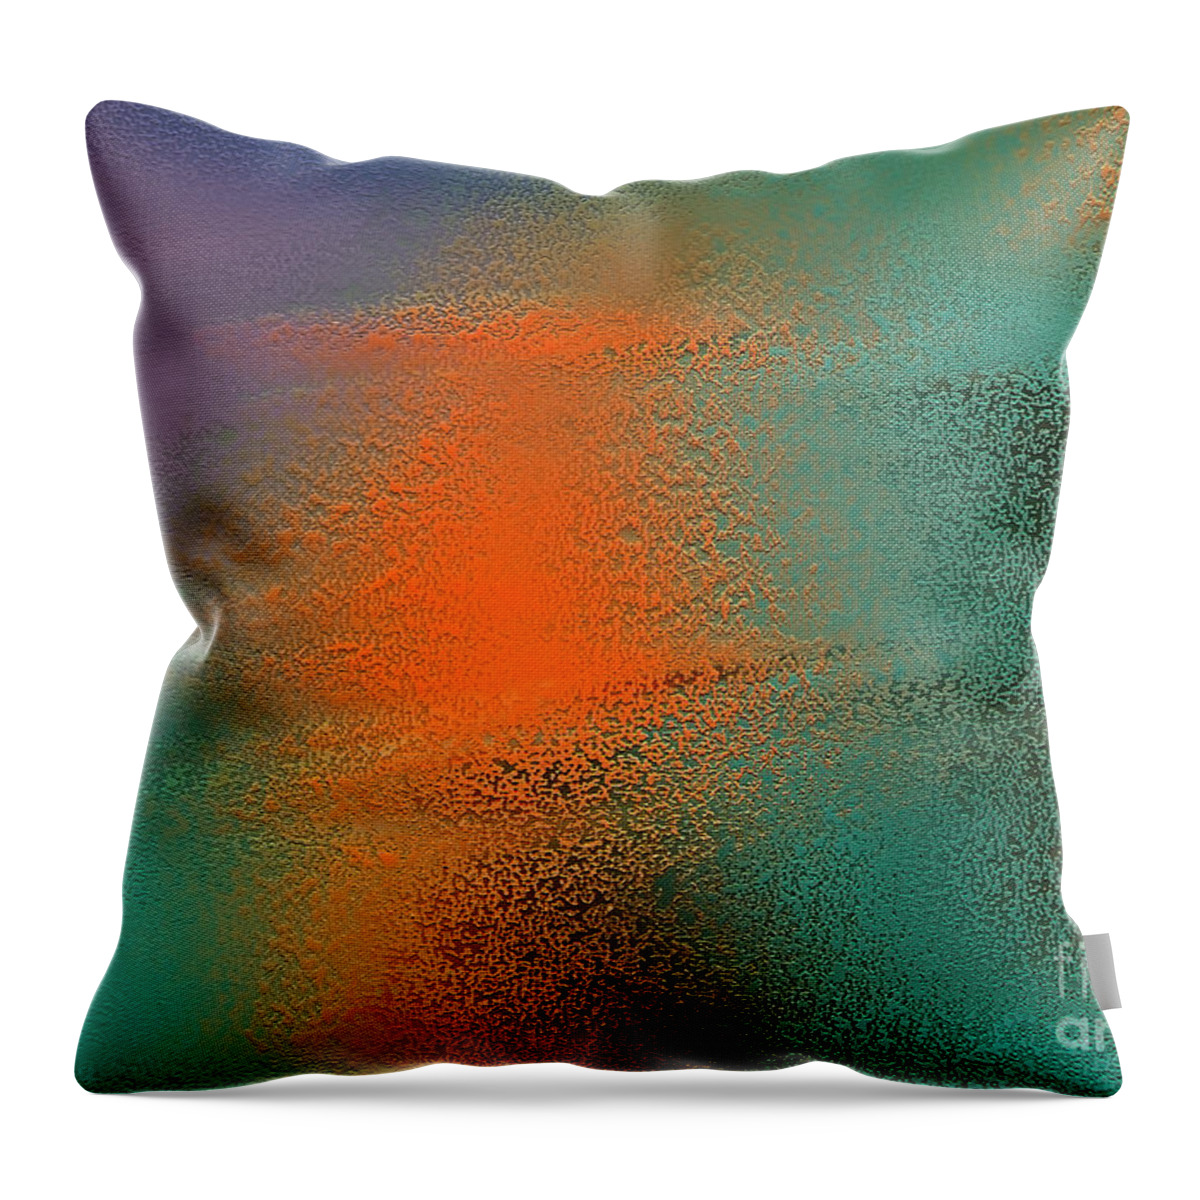 Abstract Throw Pillow featuring the digital art Orange and green dancing by Danuta Bennett